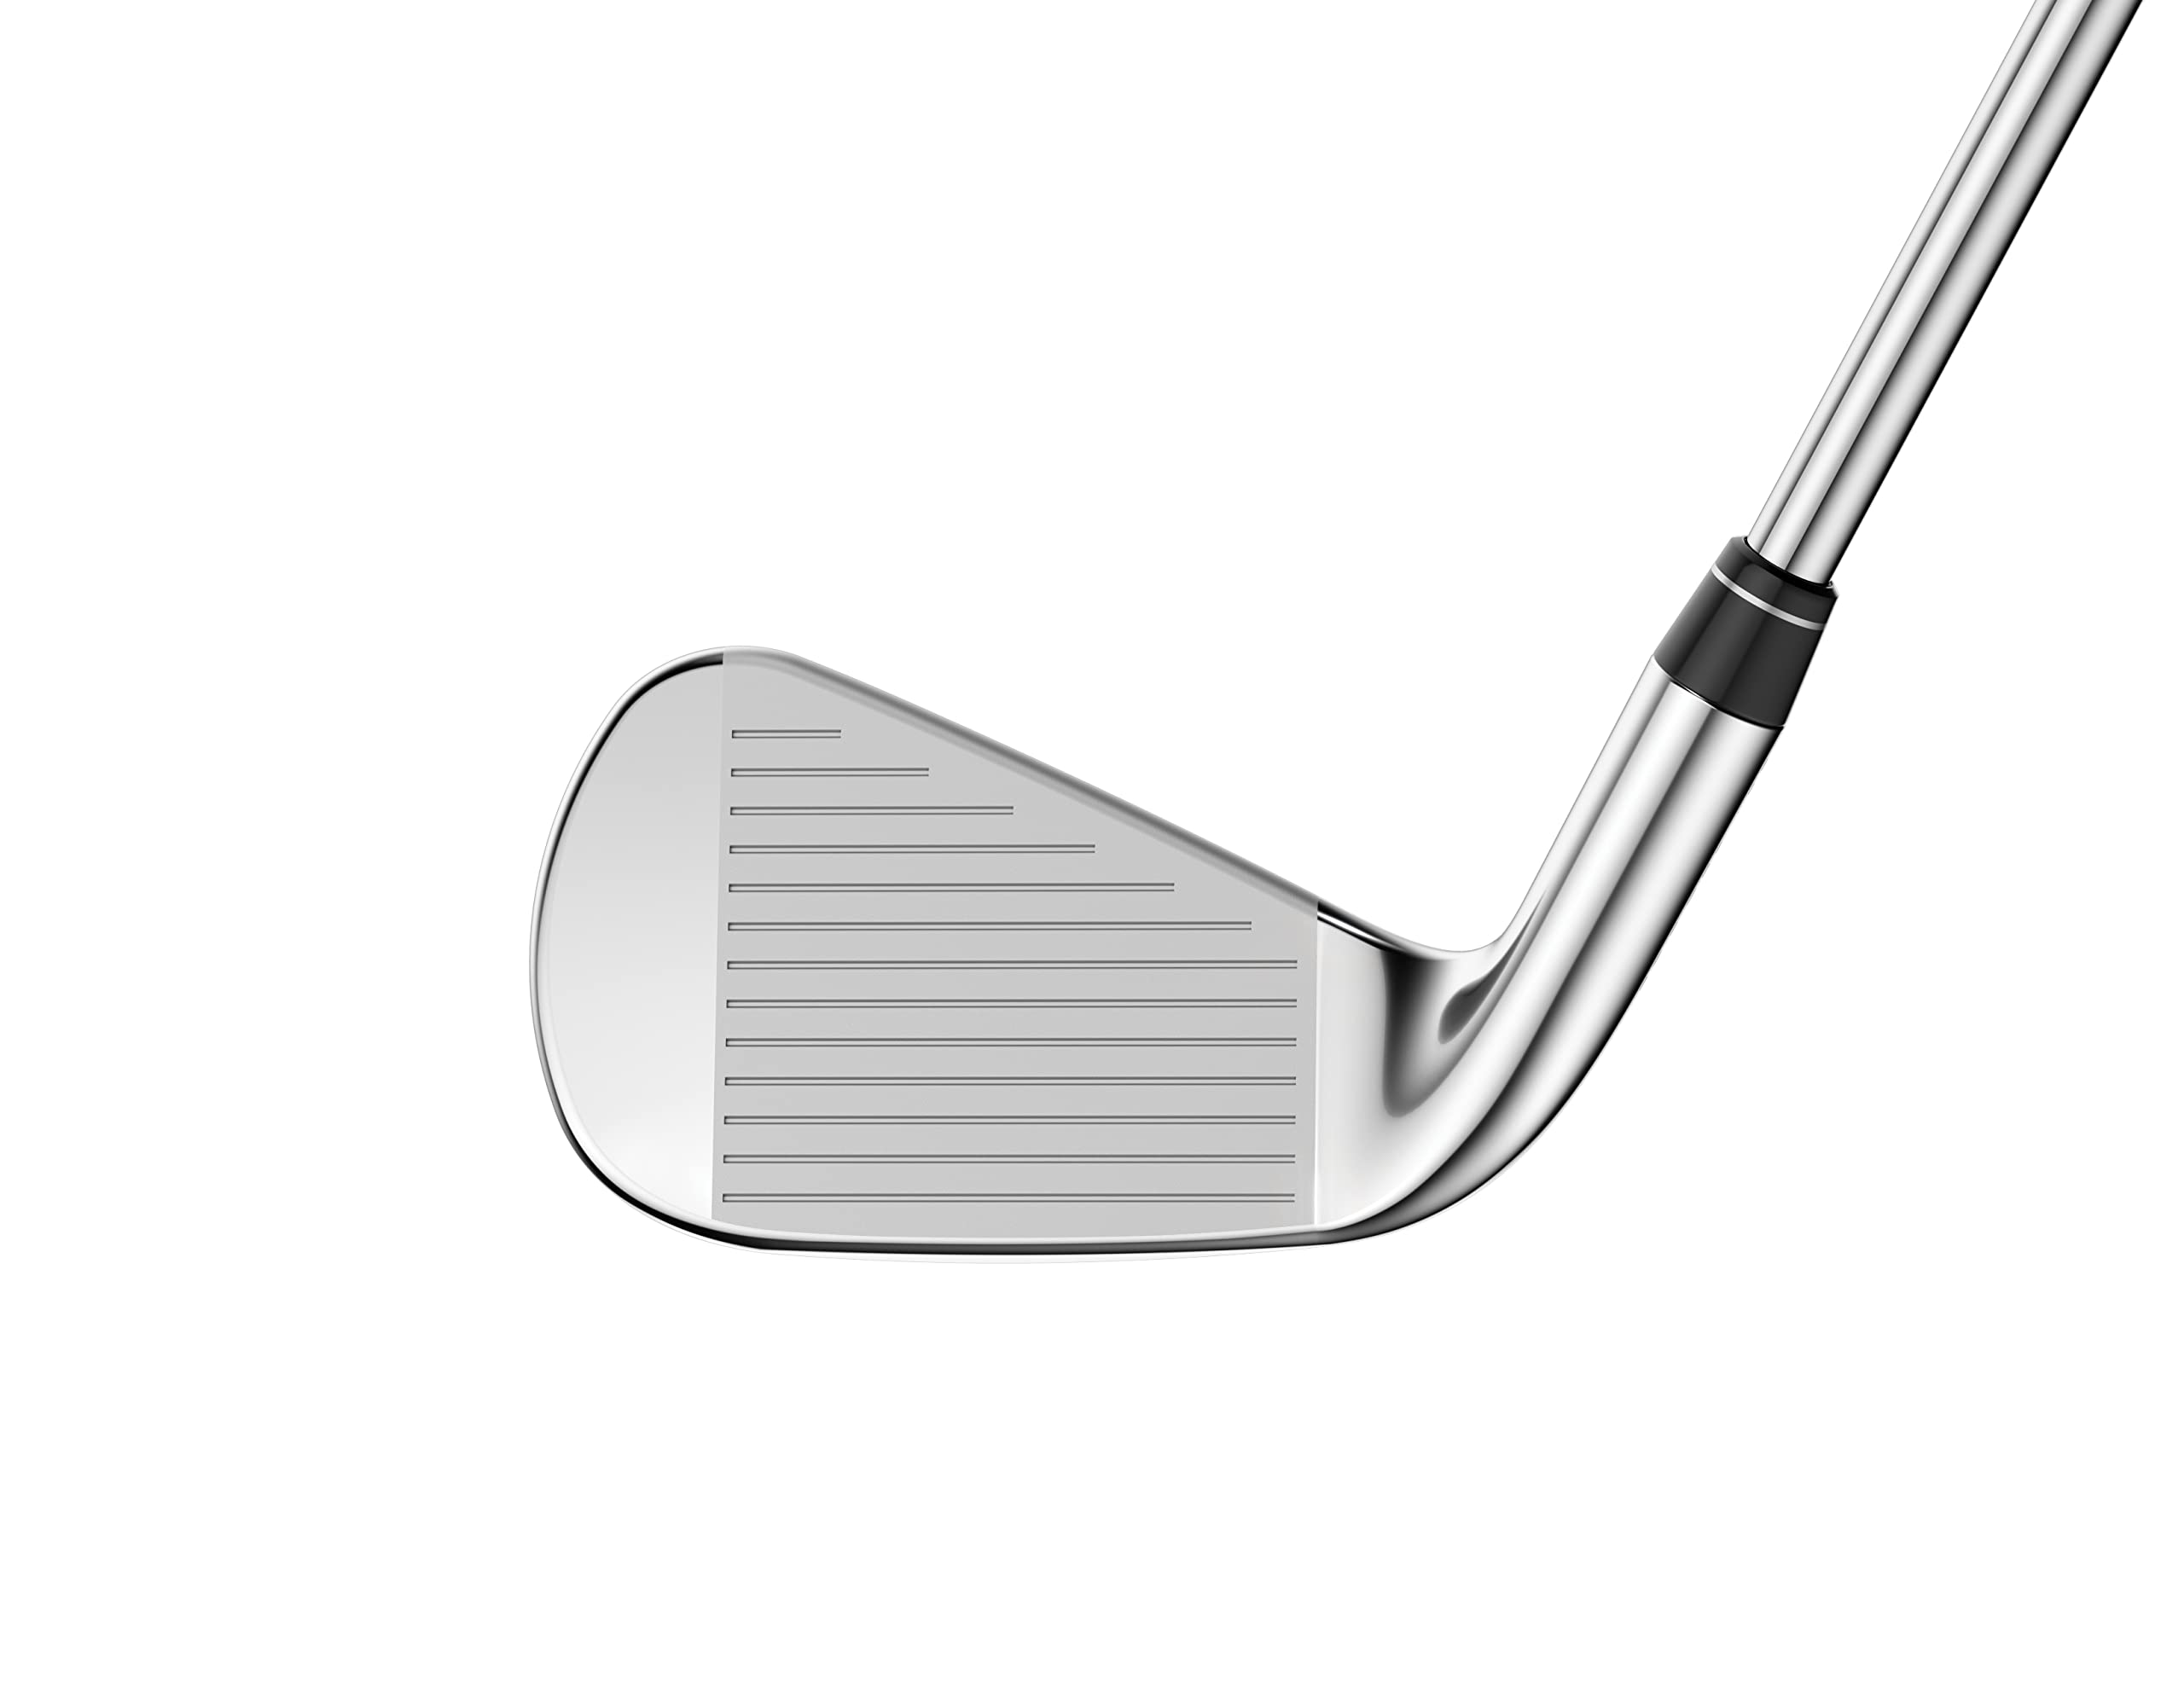 Callaway Golf 2023 Paradym Iron Set